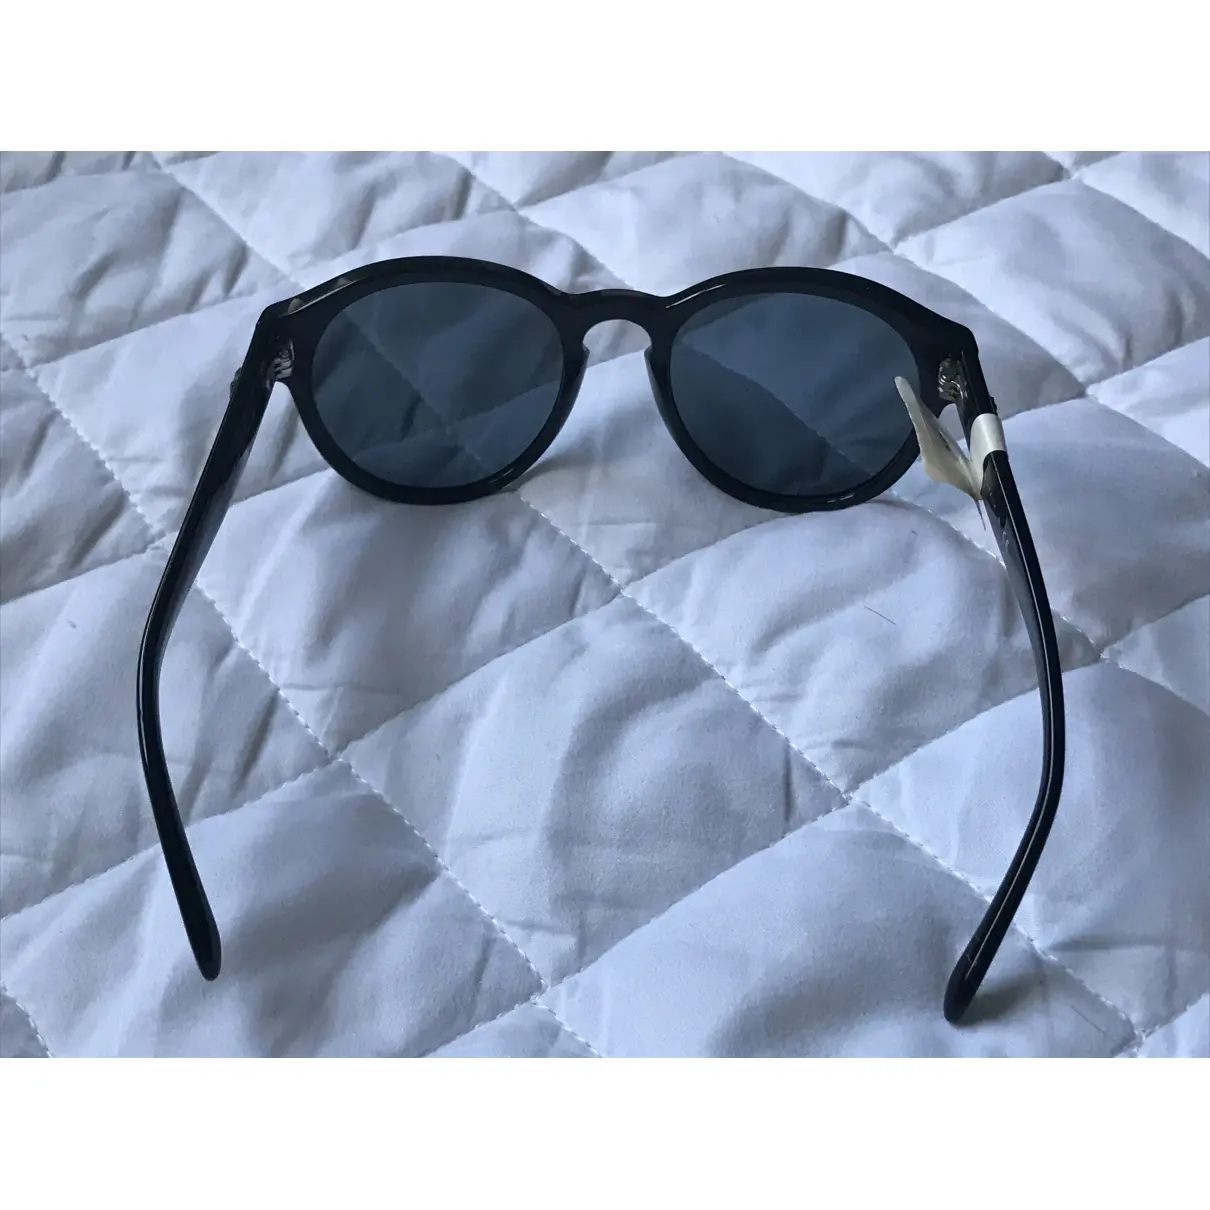 Sunglasses Chanel